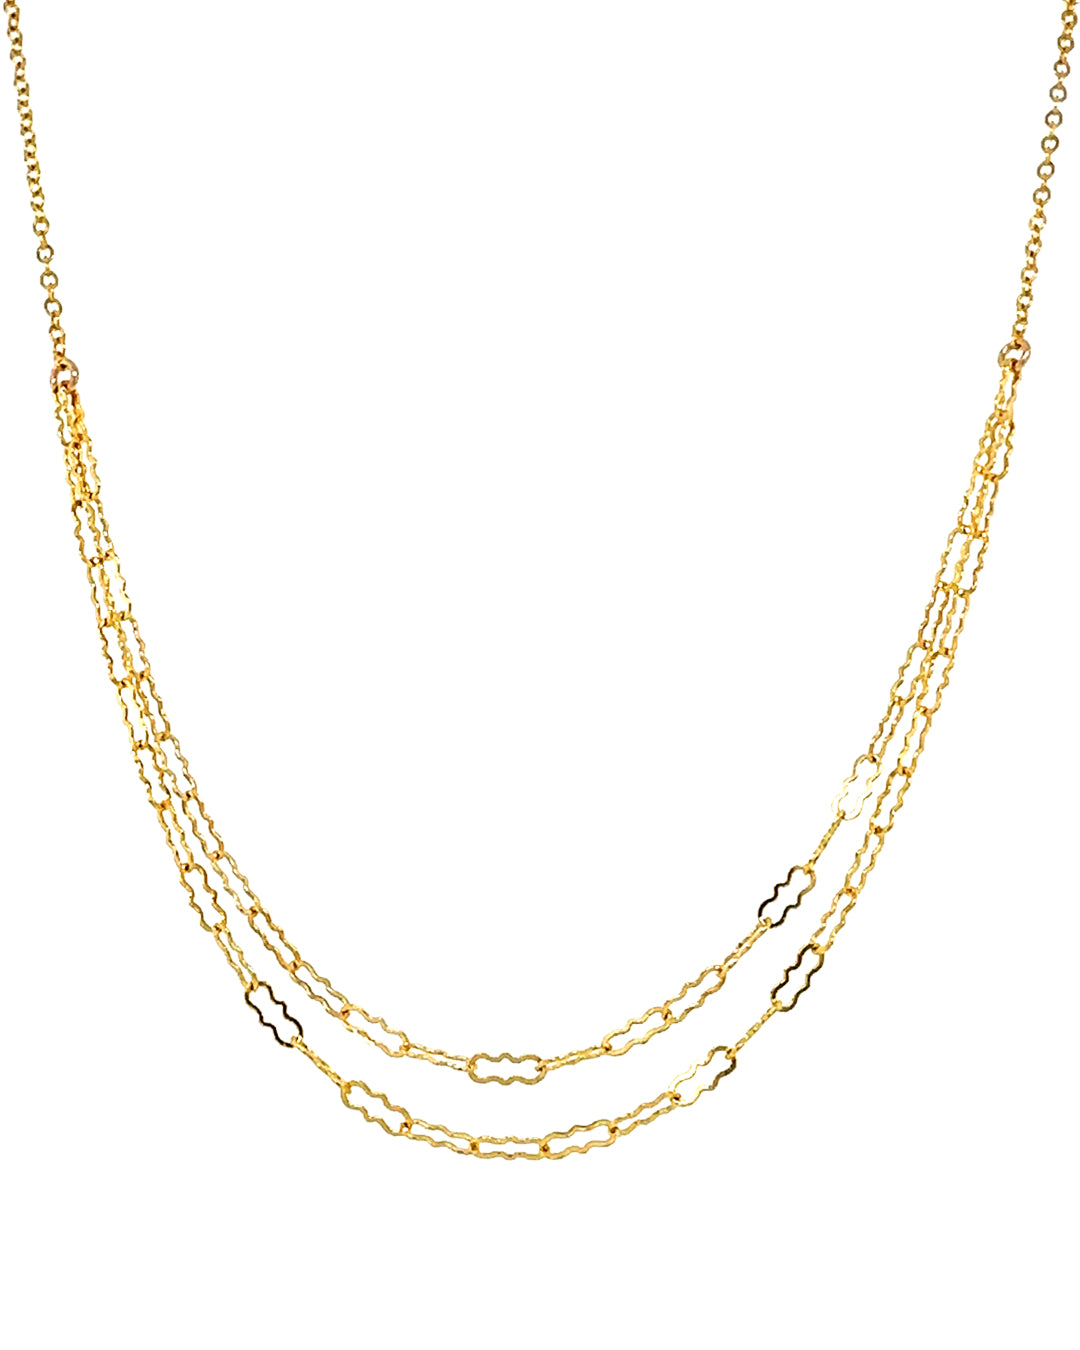 14k gold fill double strand choker necklace 